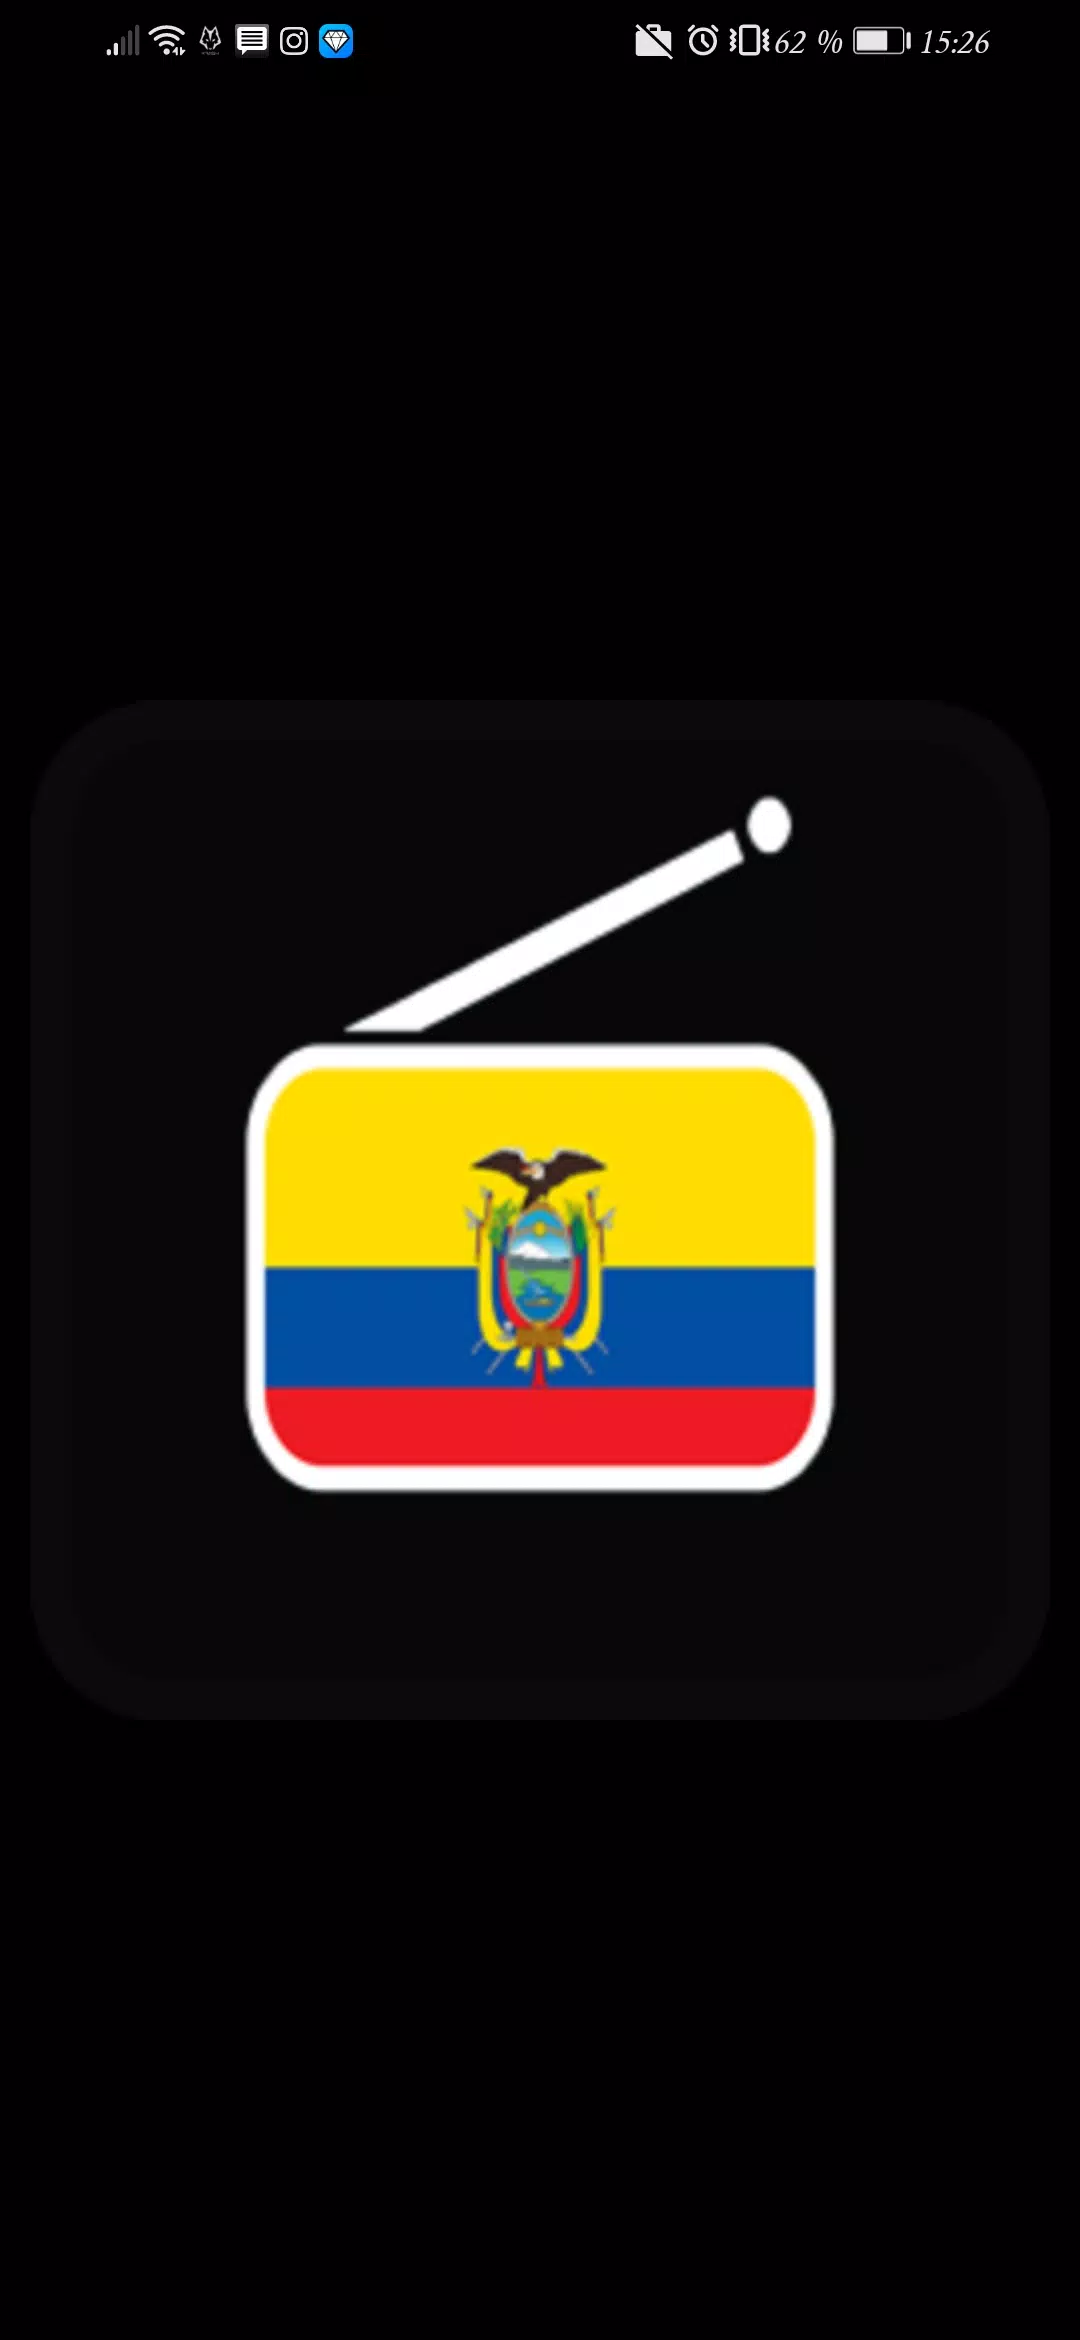 Radios Del Ecuador APK pour Android Télécharger